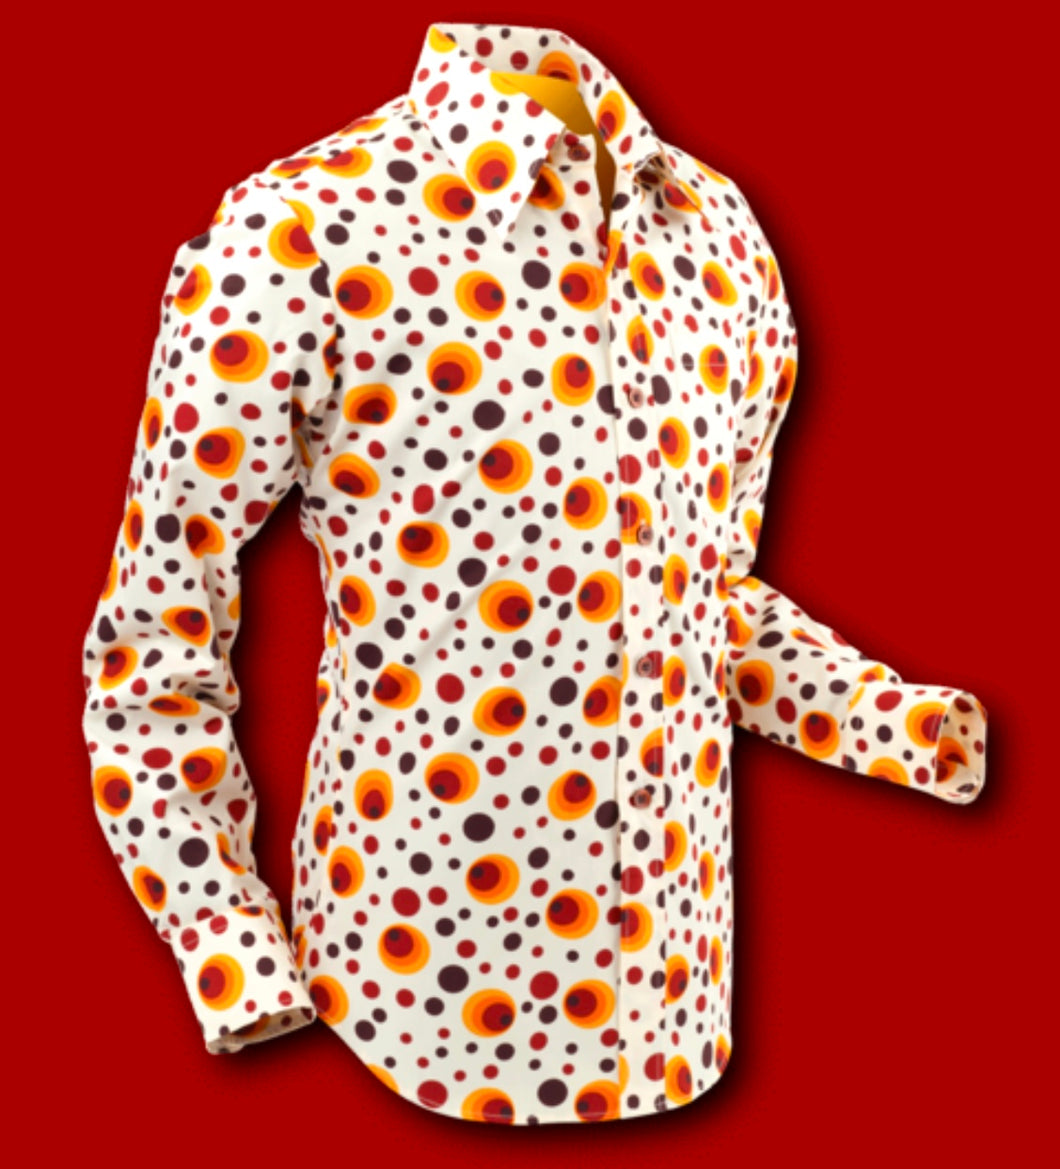 Dots & Spots design long sleeved Retro 70s style shirt in Orange